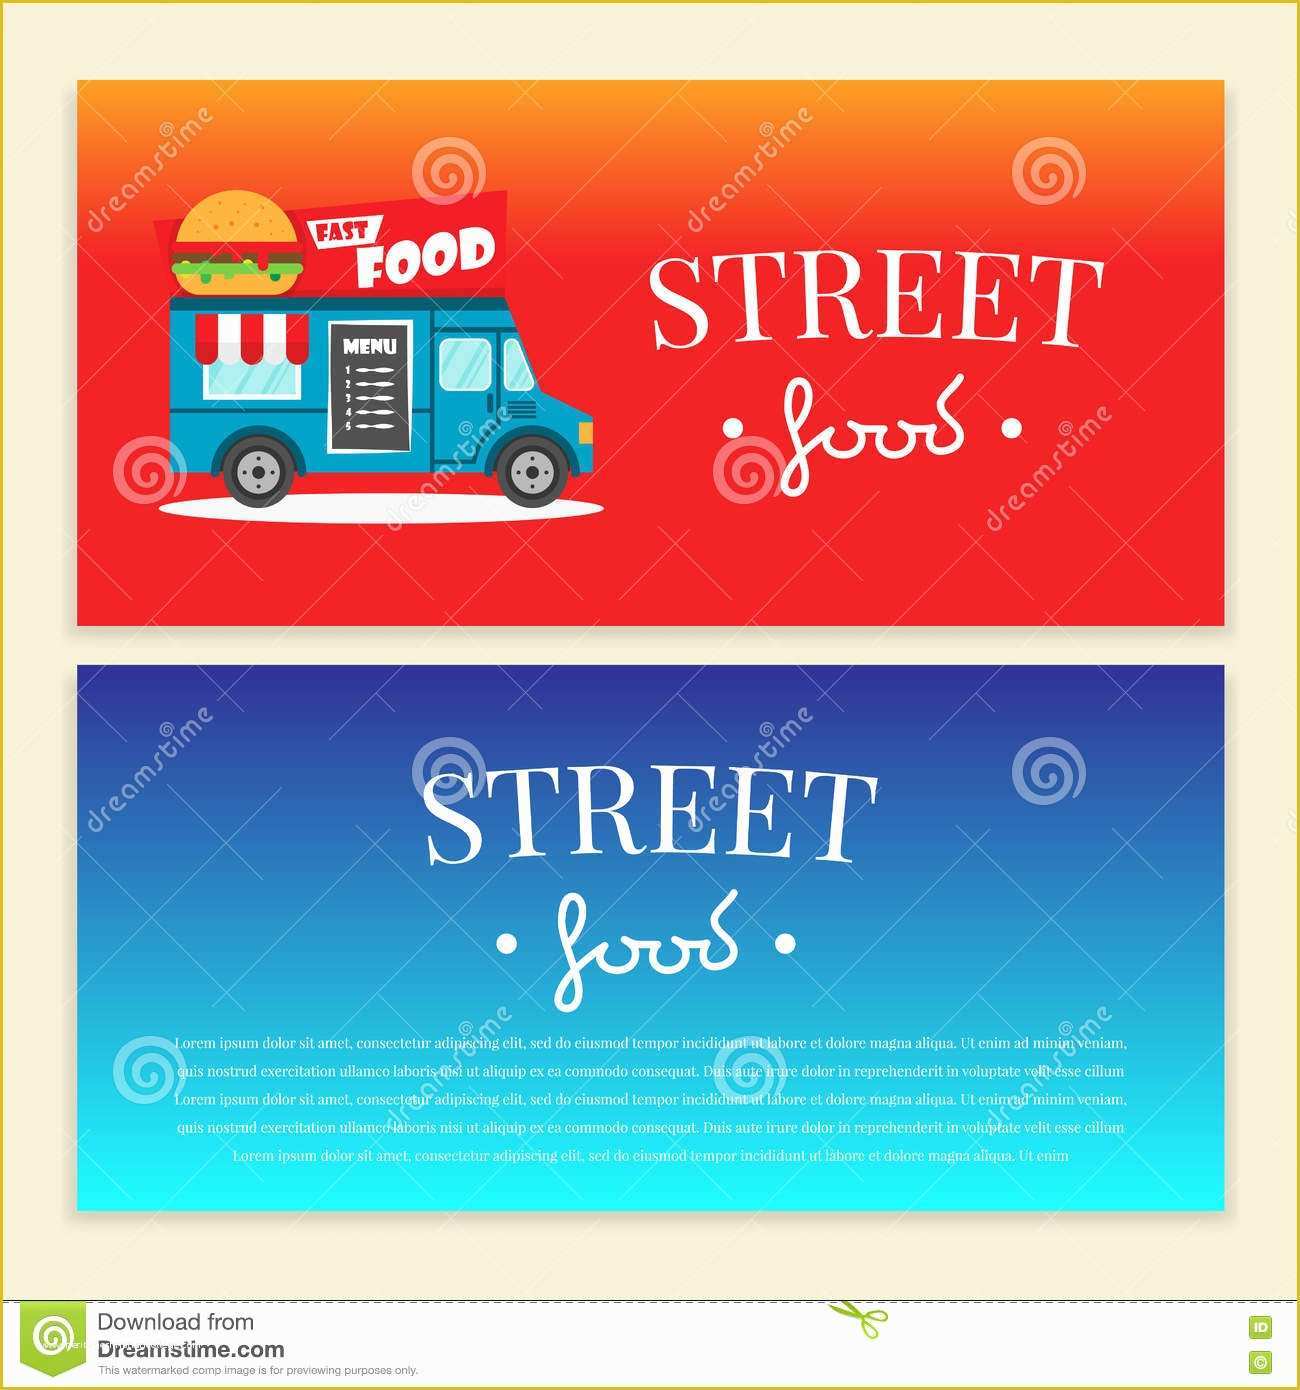 Food Banner Design Template Free Of Street Food Truck Vector Illustration Stock Vector Image